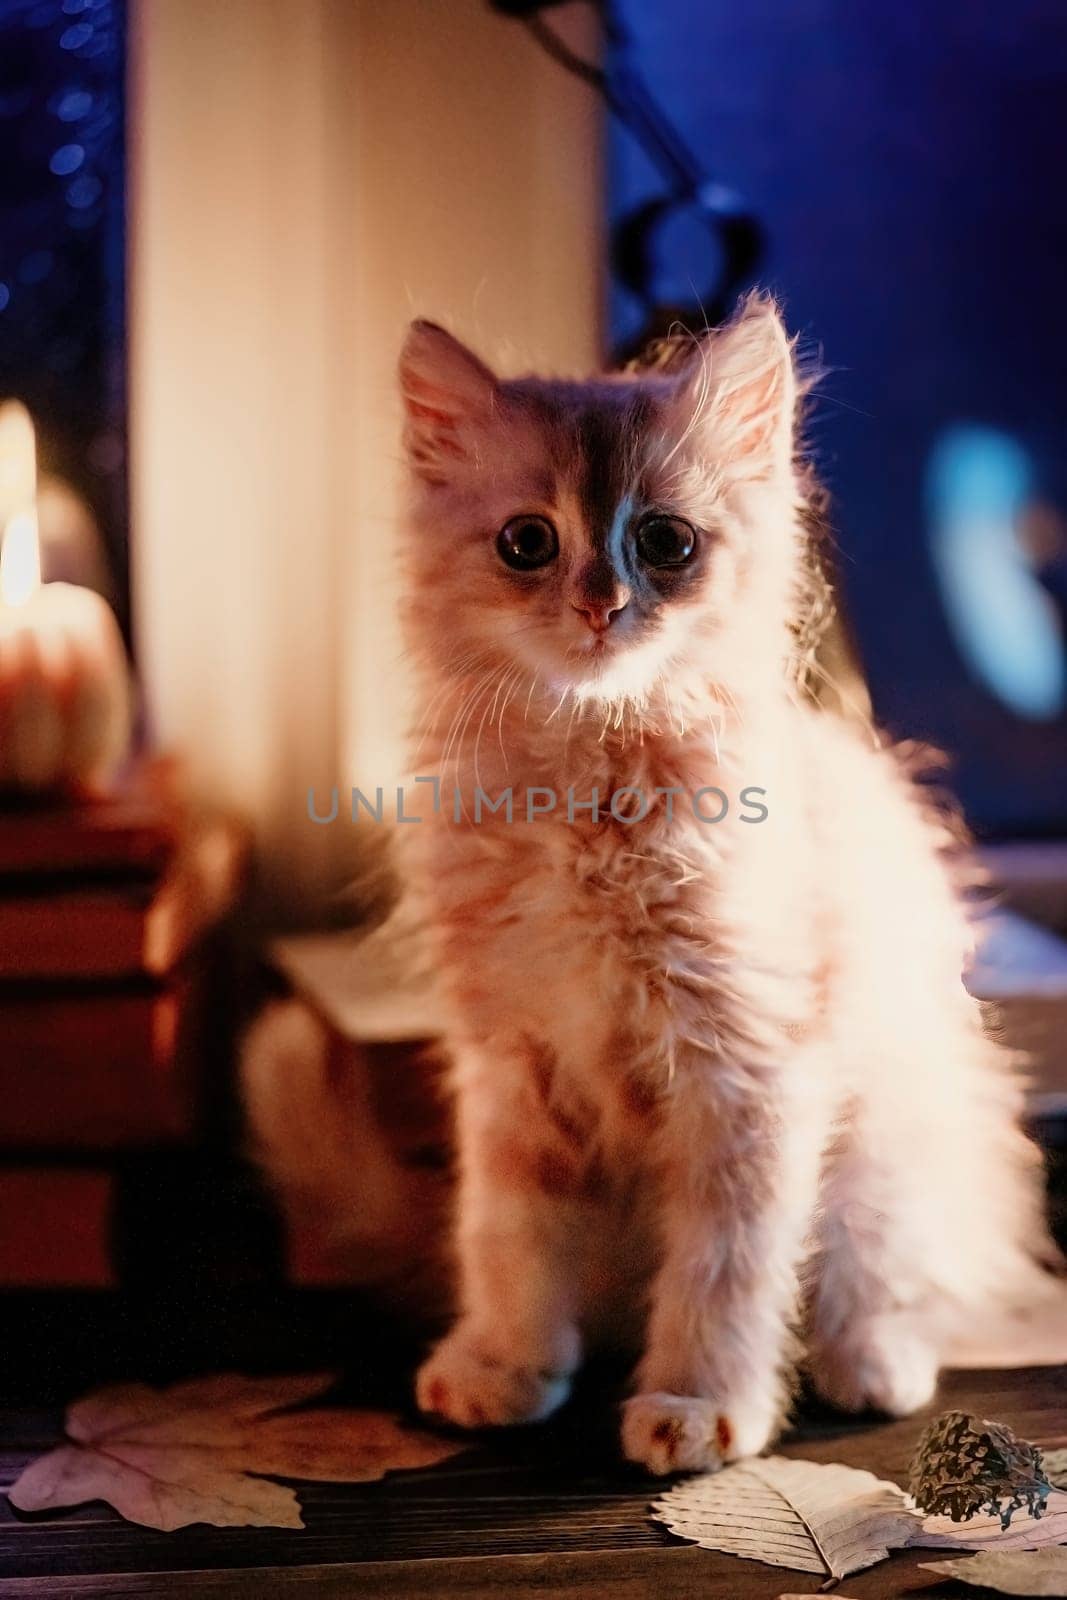 Little kitten sitting near books stacked by rainy window. Cute pumpkin candles by kristina_kokhanova